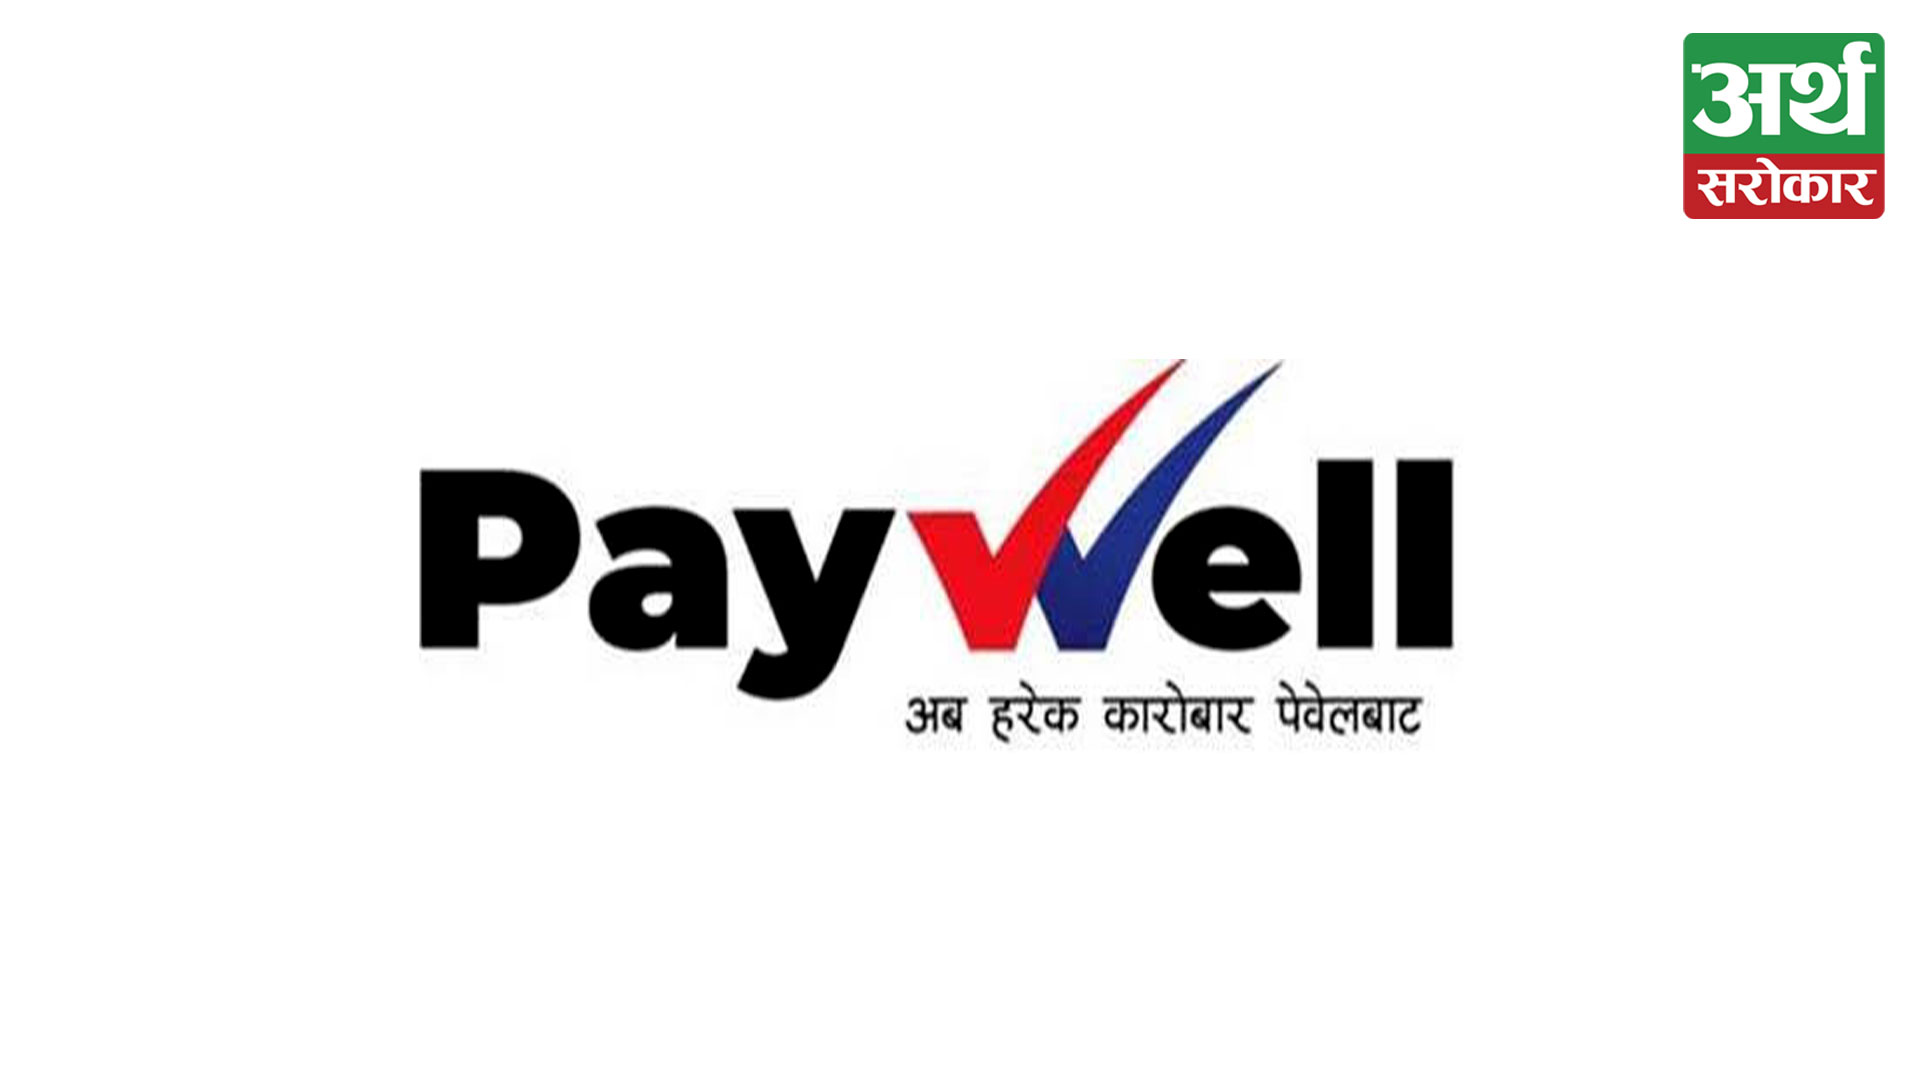 Paywell Nepal and Nepal Remit announce strategic partnership